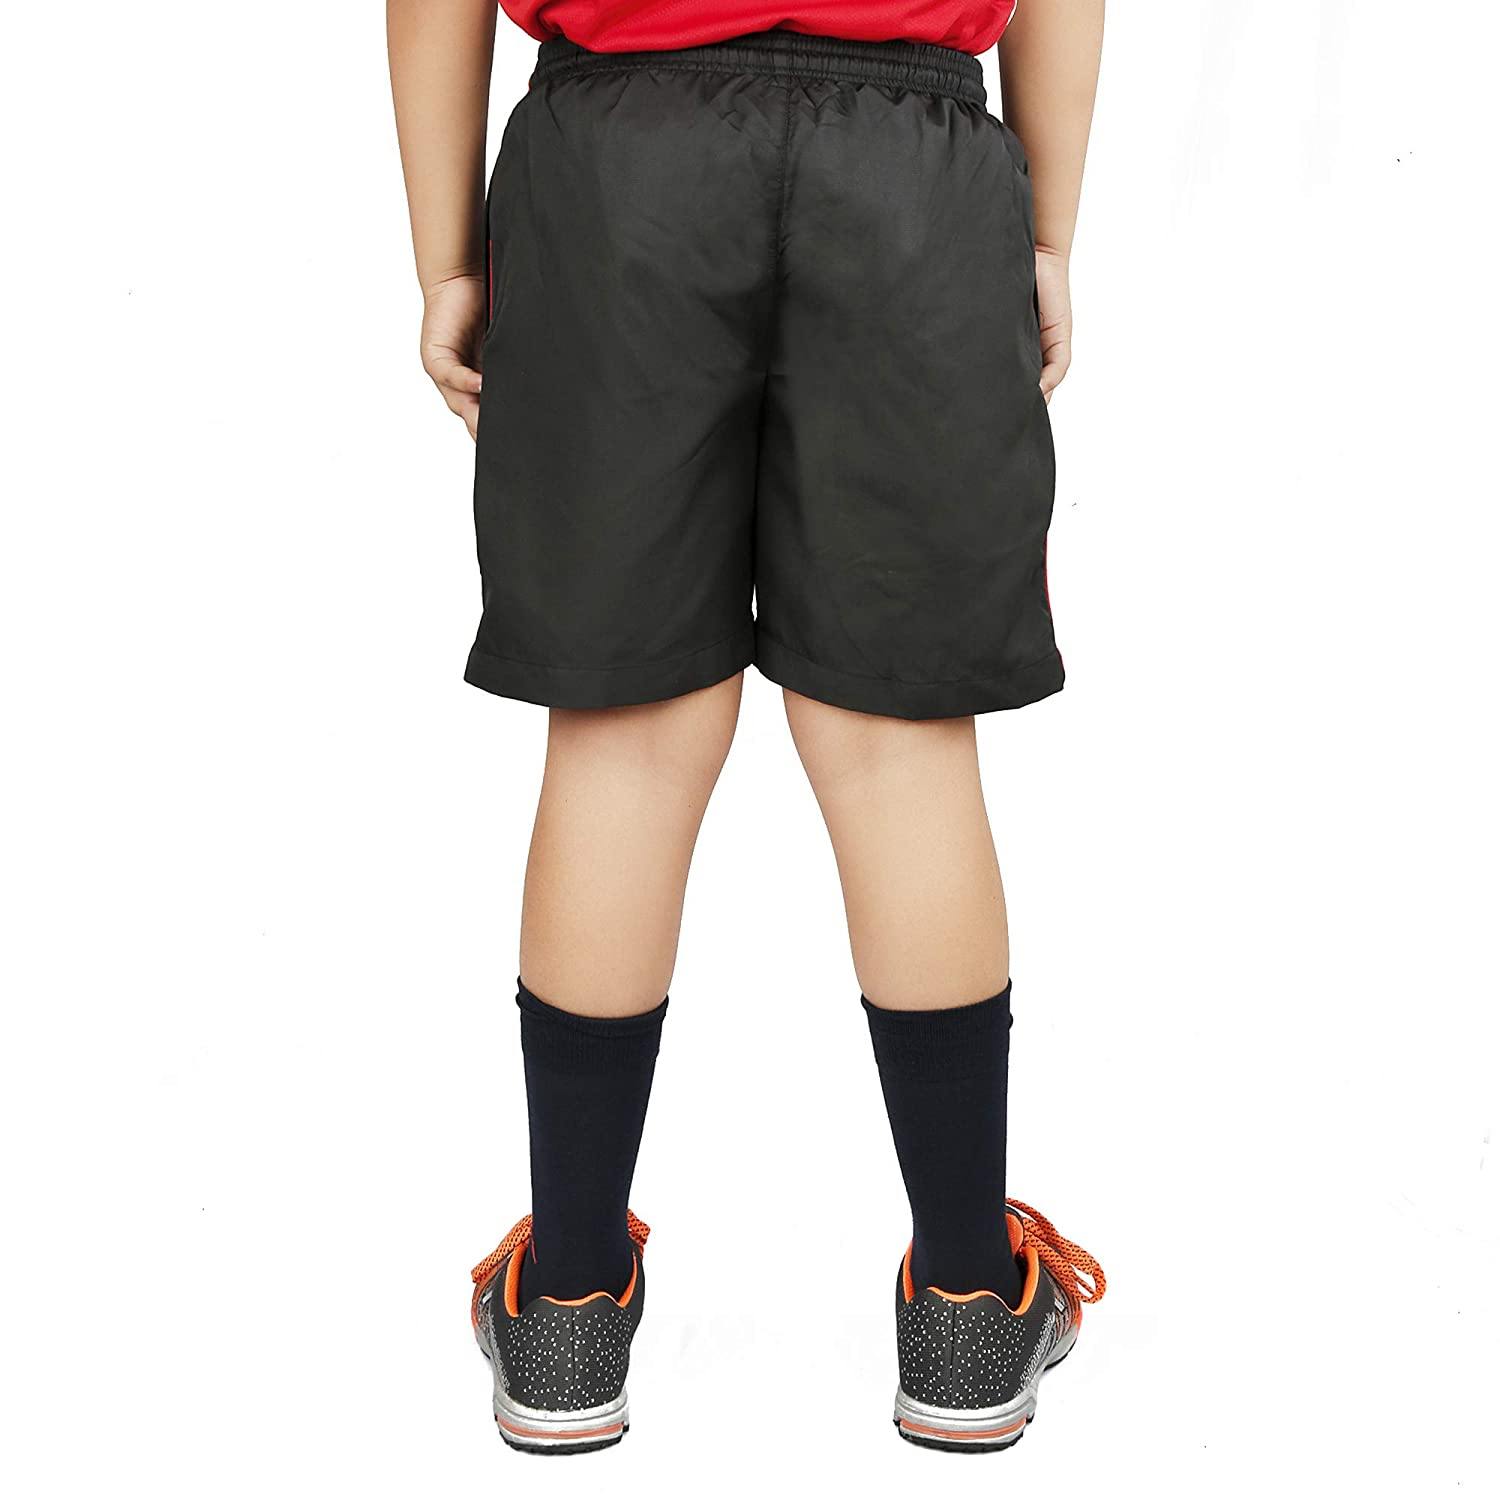 Vector X Polyester Kids Shorts Black - Best Price online Prokicksports.com